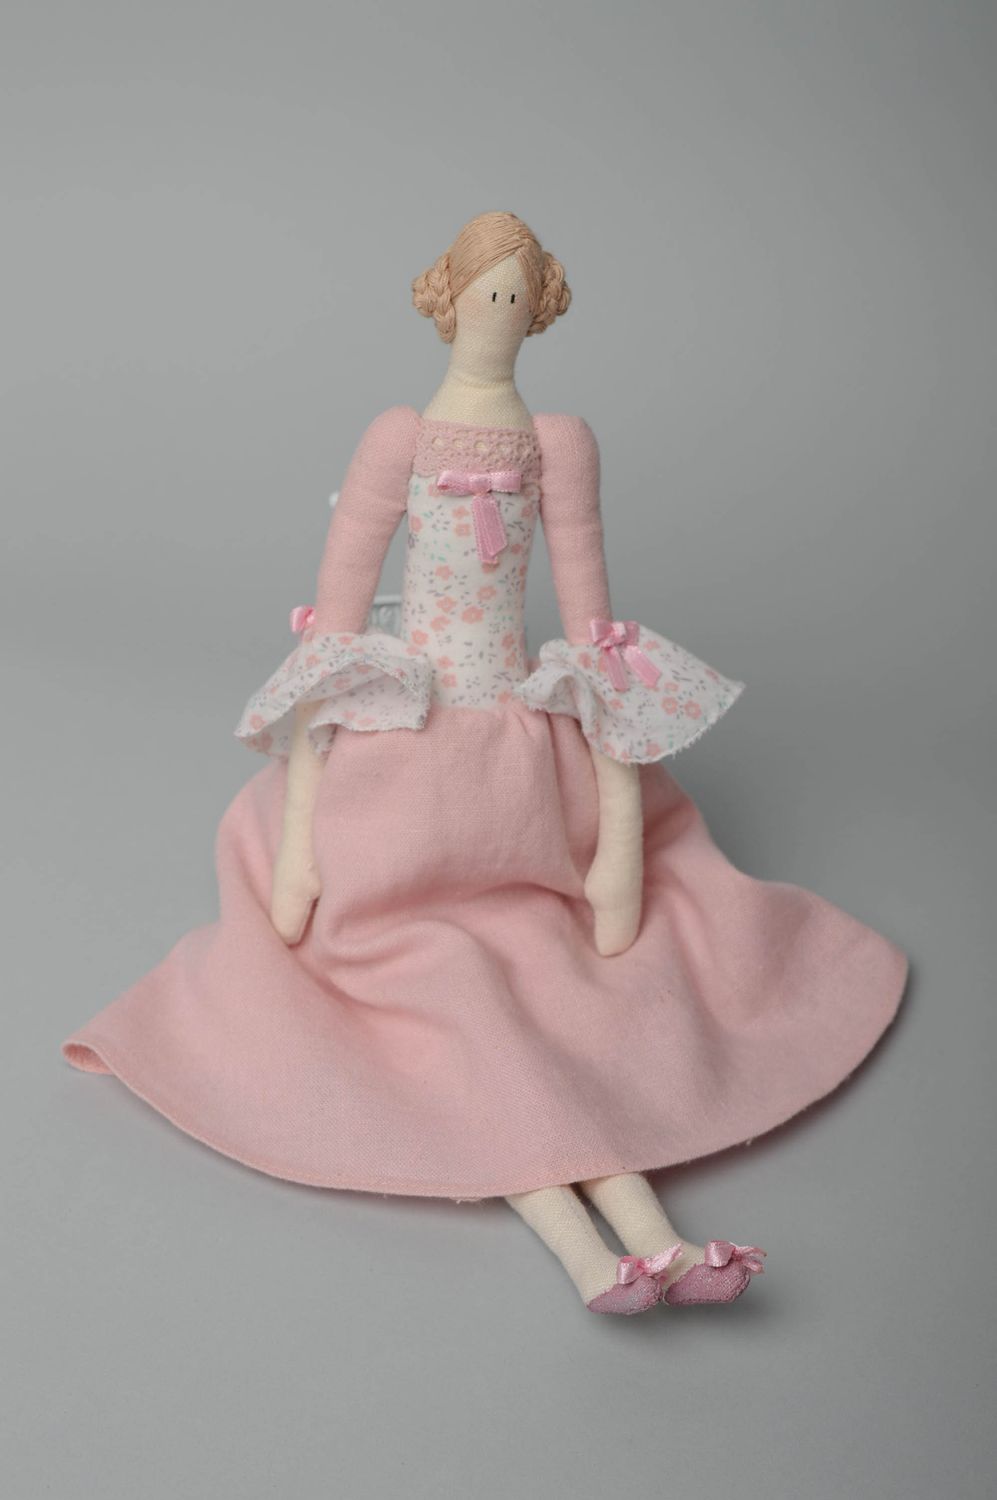 Soft doll made of natural materials photo 1